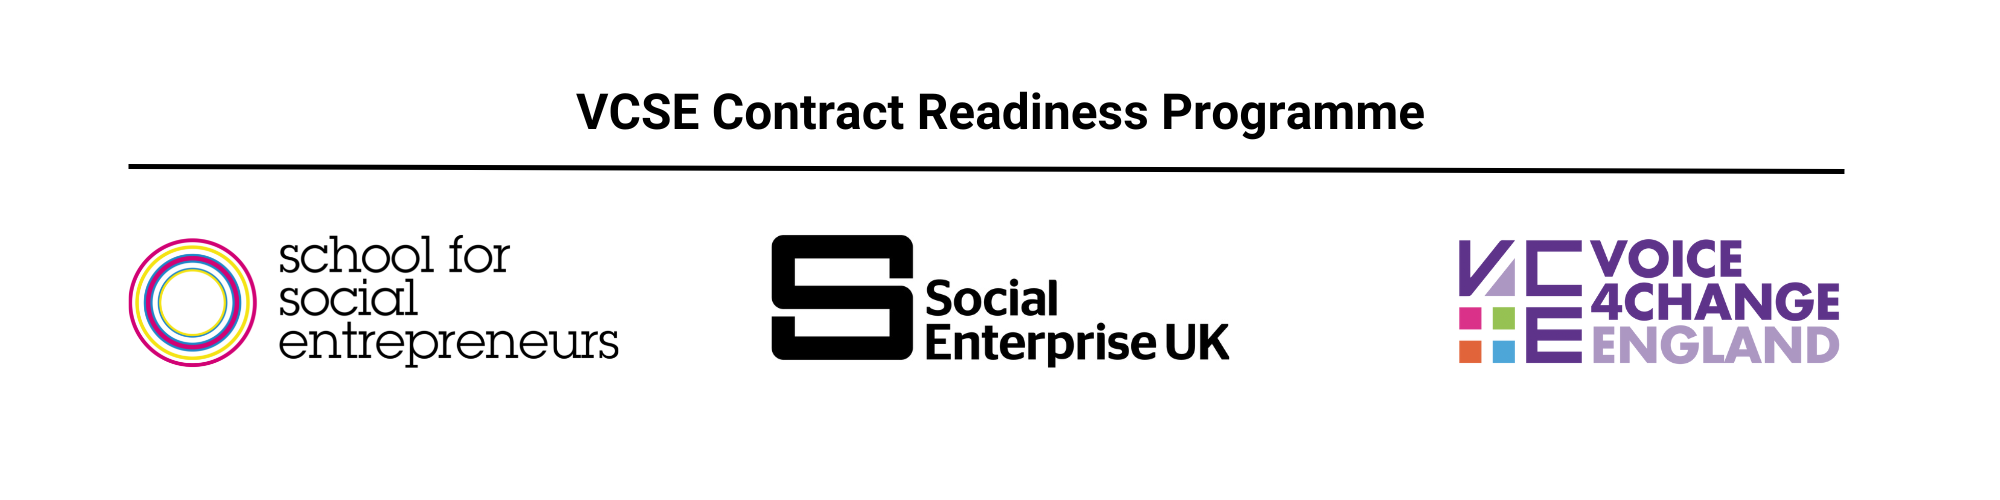 VCSE Contract Readiness Programme partner logos lockin (1) (002)